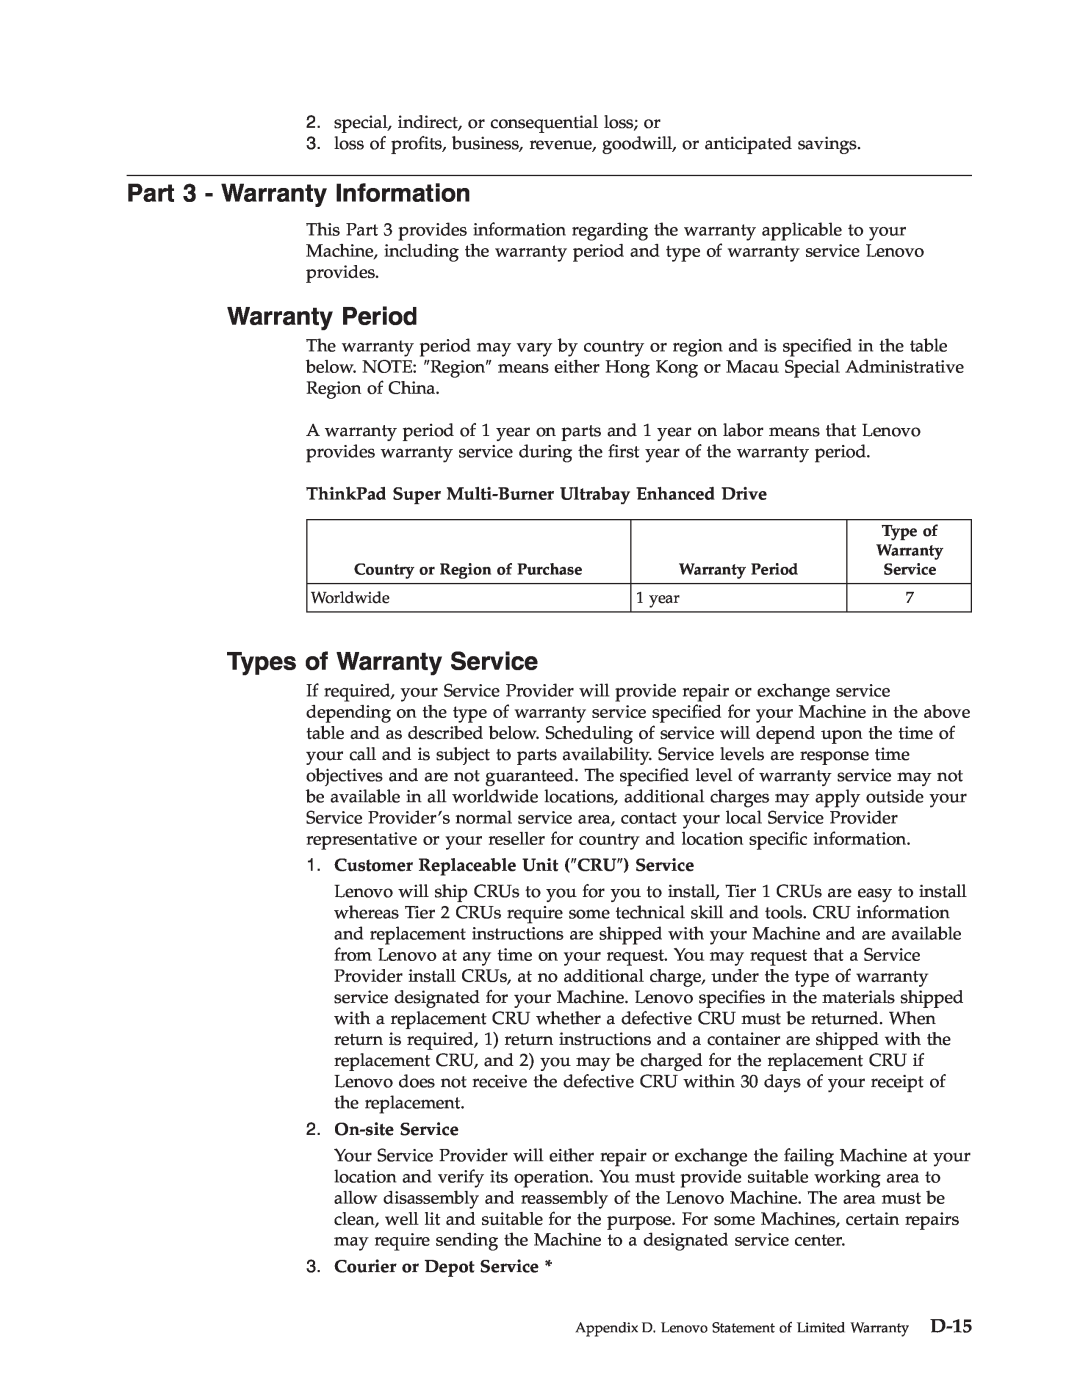 Lenovo 40Y8710 manual Part 3 - Warranty Information, Warranty Period, Types of Warranty Service, On-siteService 